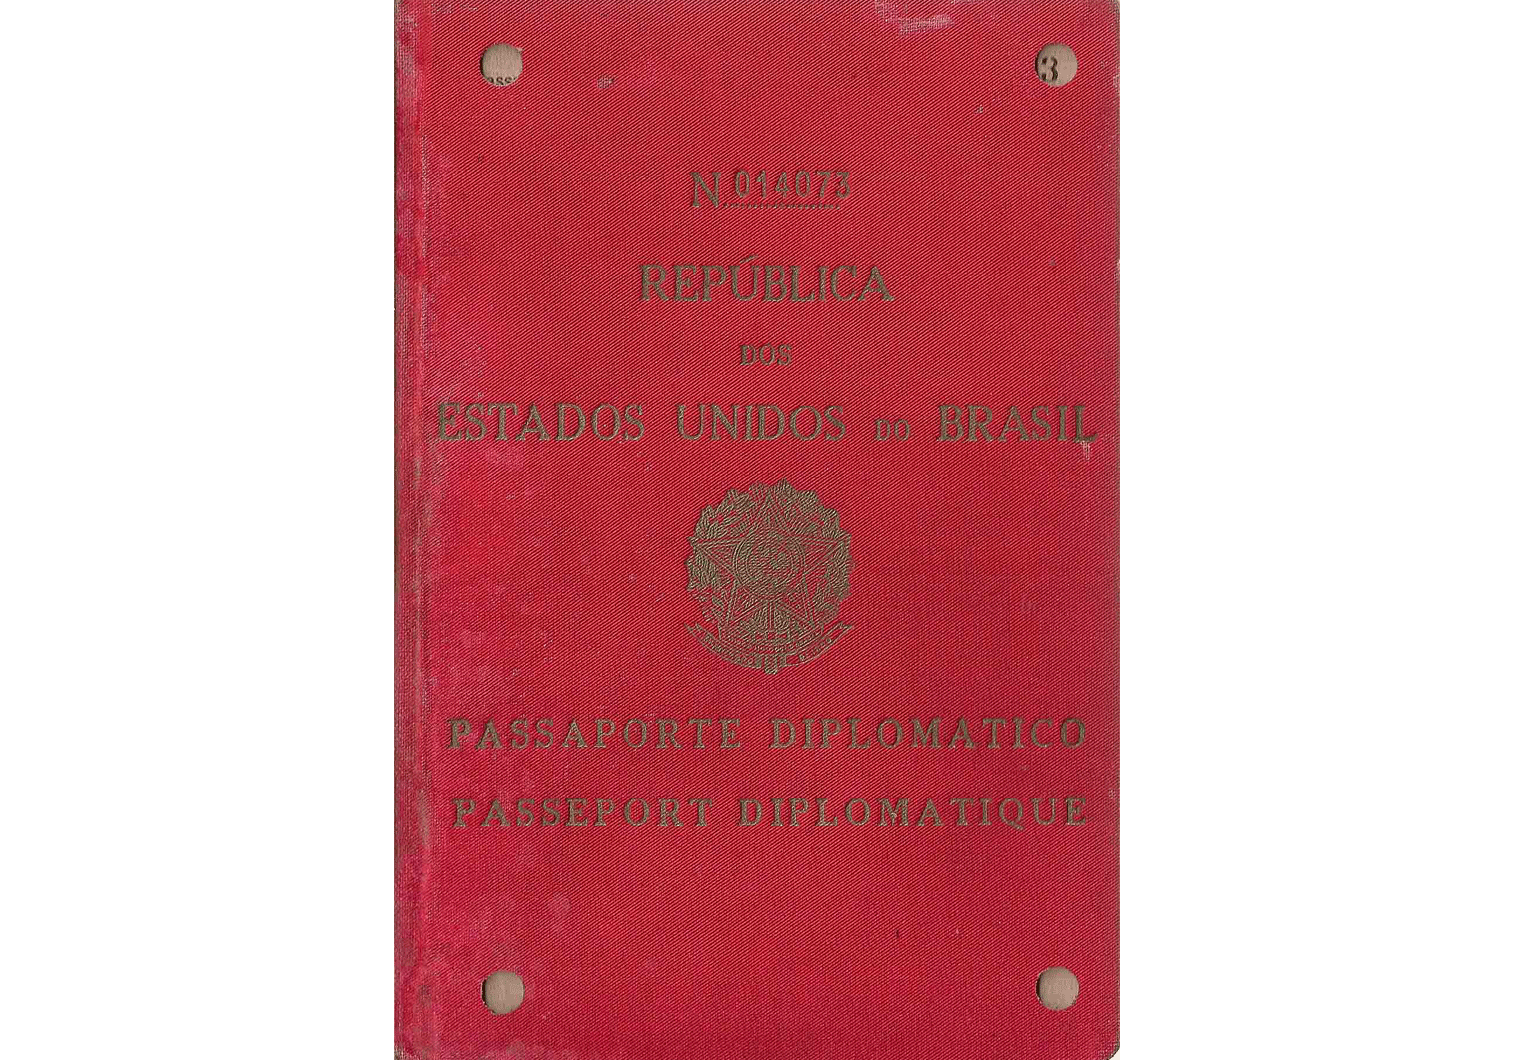 old diplomatic passport